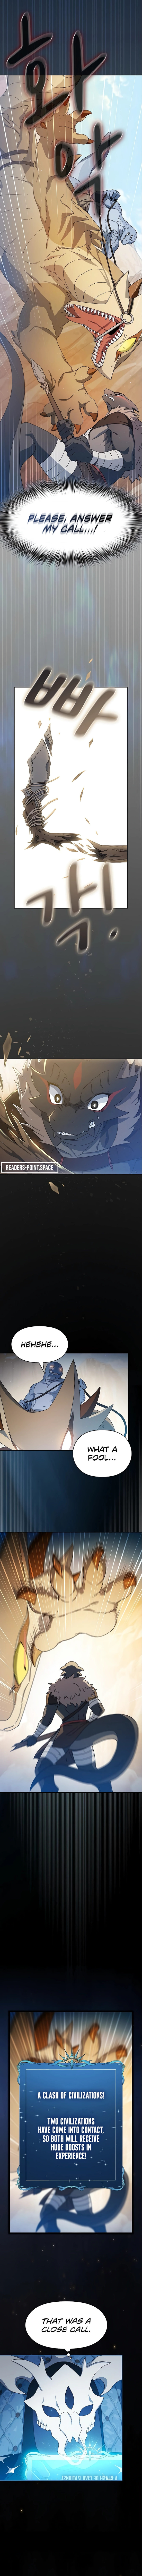 The Nebula’s Civilization Chapter 7 - Page 2